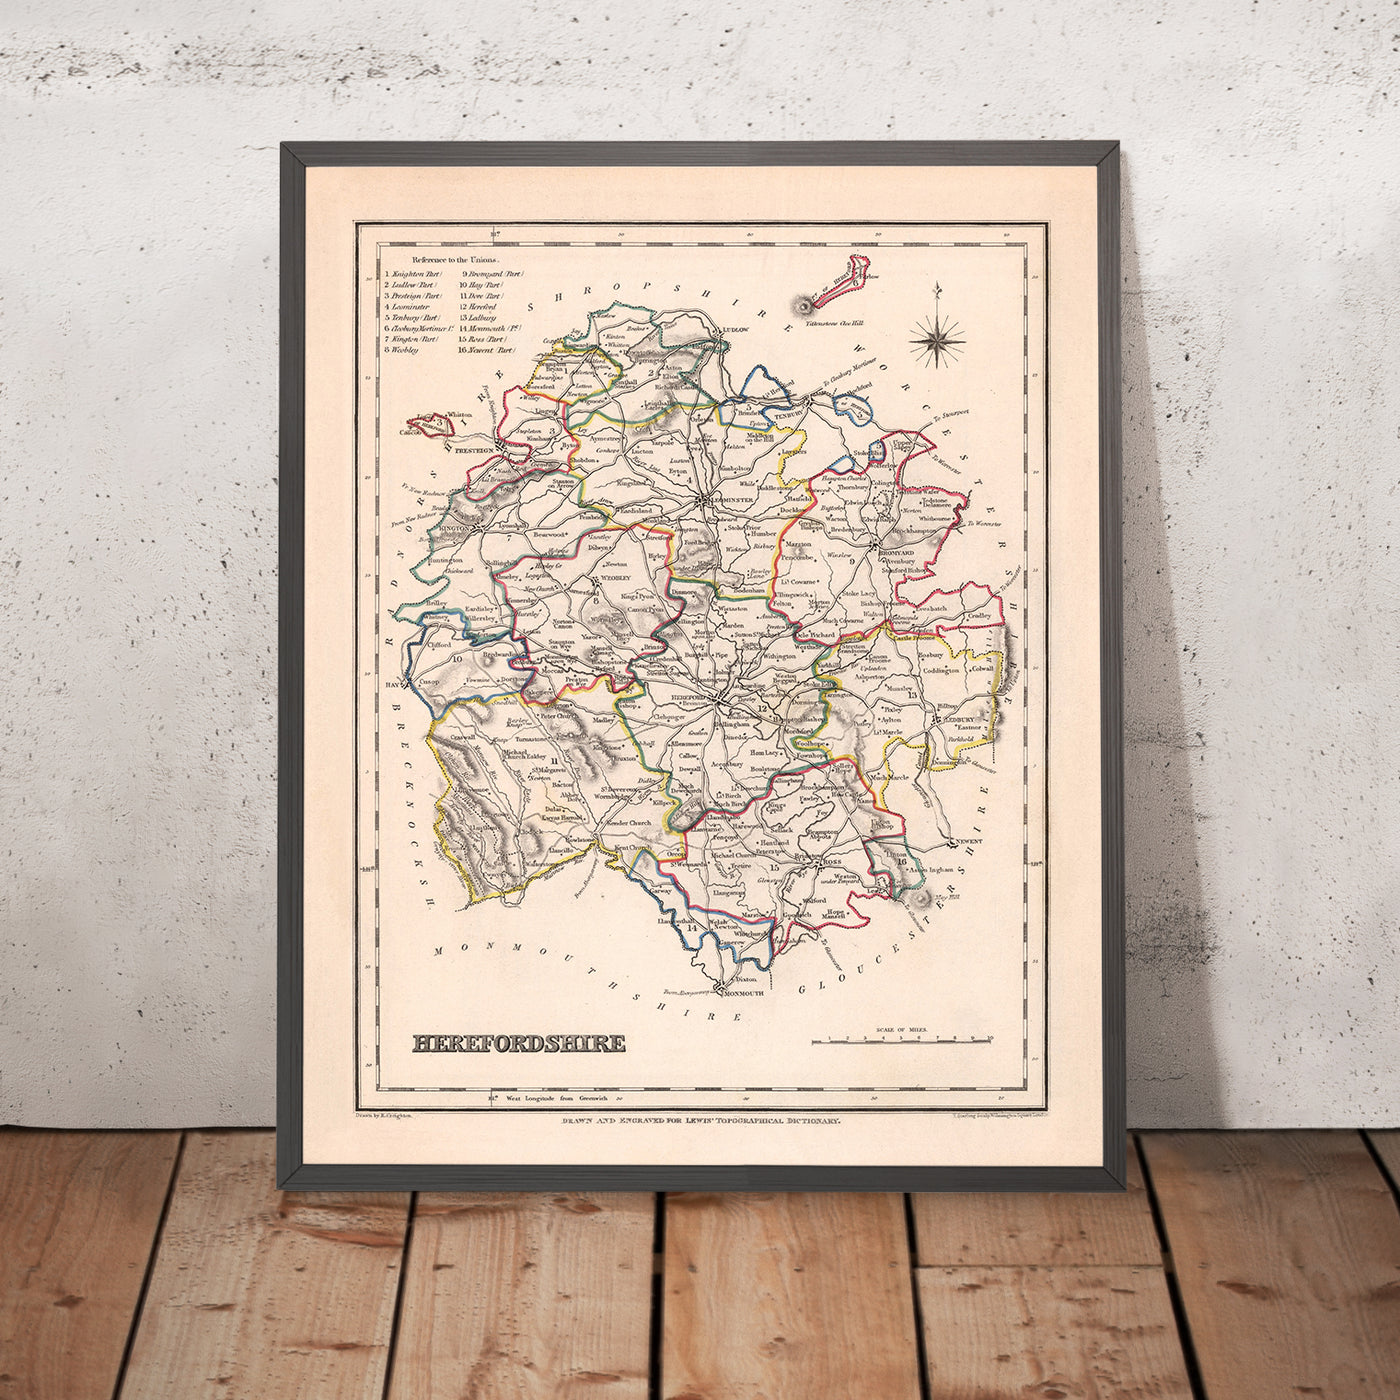 Old Map of Herefordshire by Samuel Lewis, 1844: Ledbury, Leominster, Ross-on-Wye, Bromyard, Hay-on-Wye